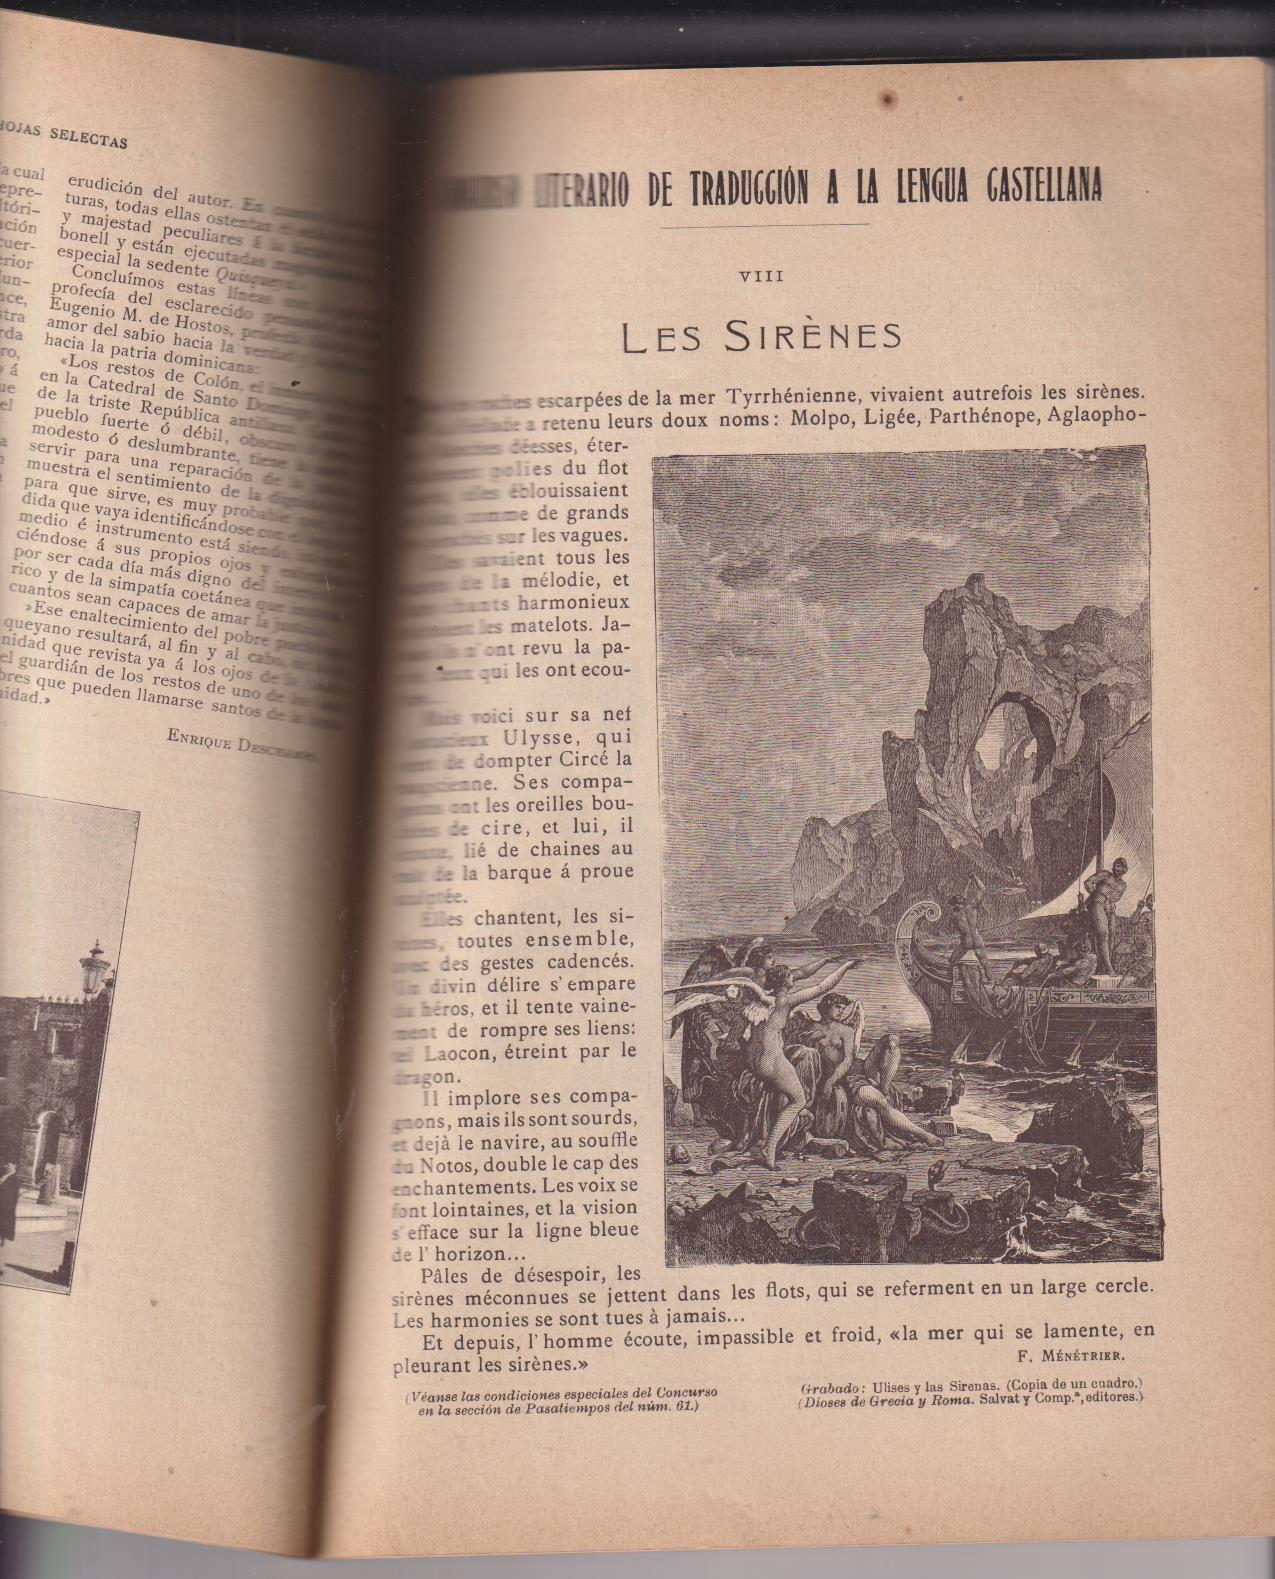 Hojas Selectas nº 68. Agosto de 1907